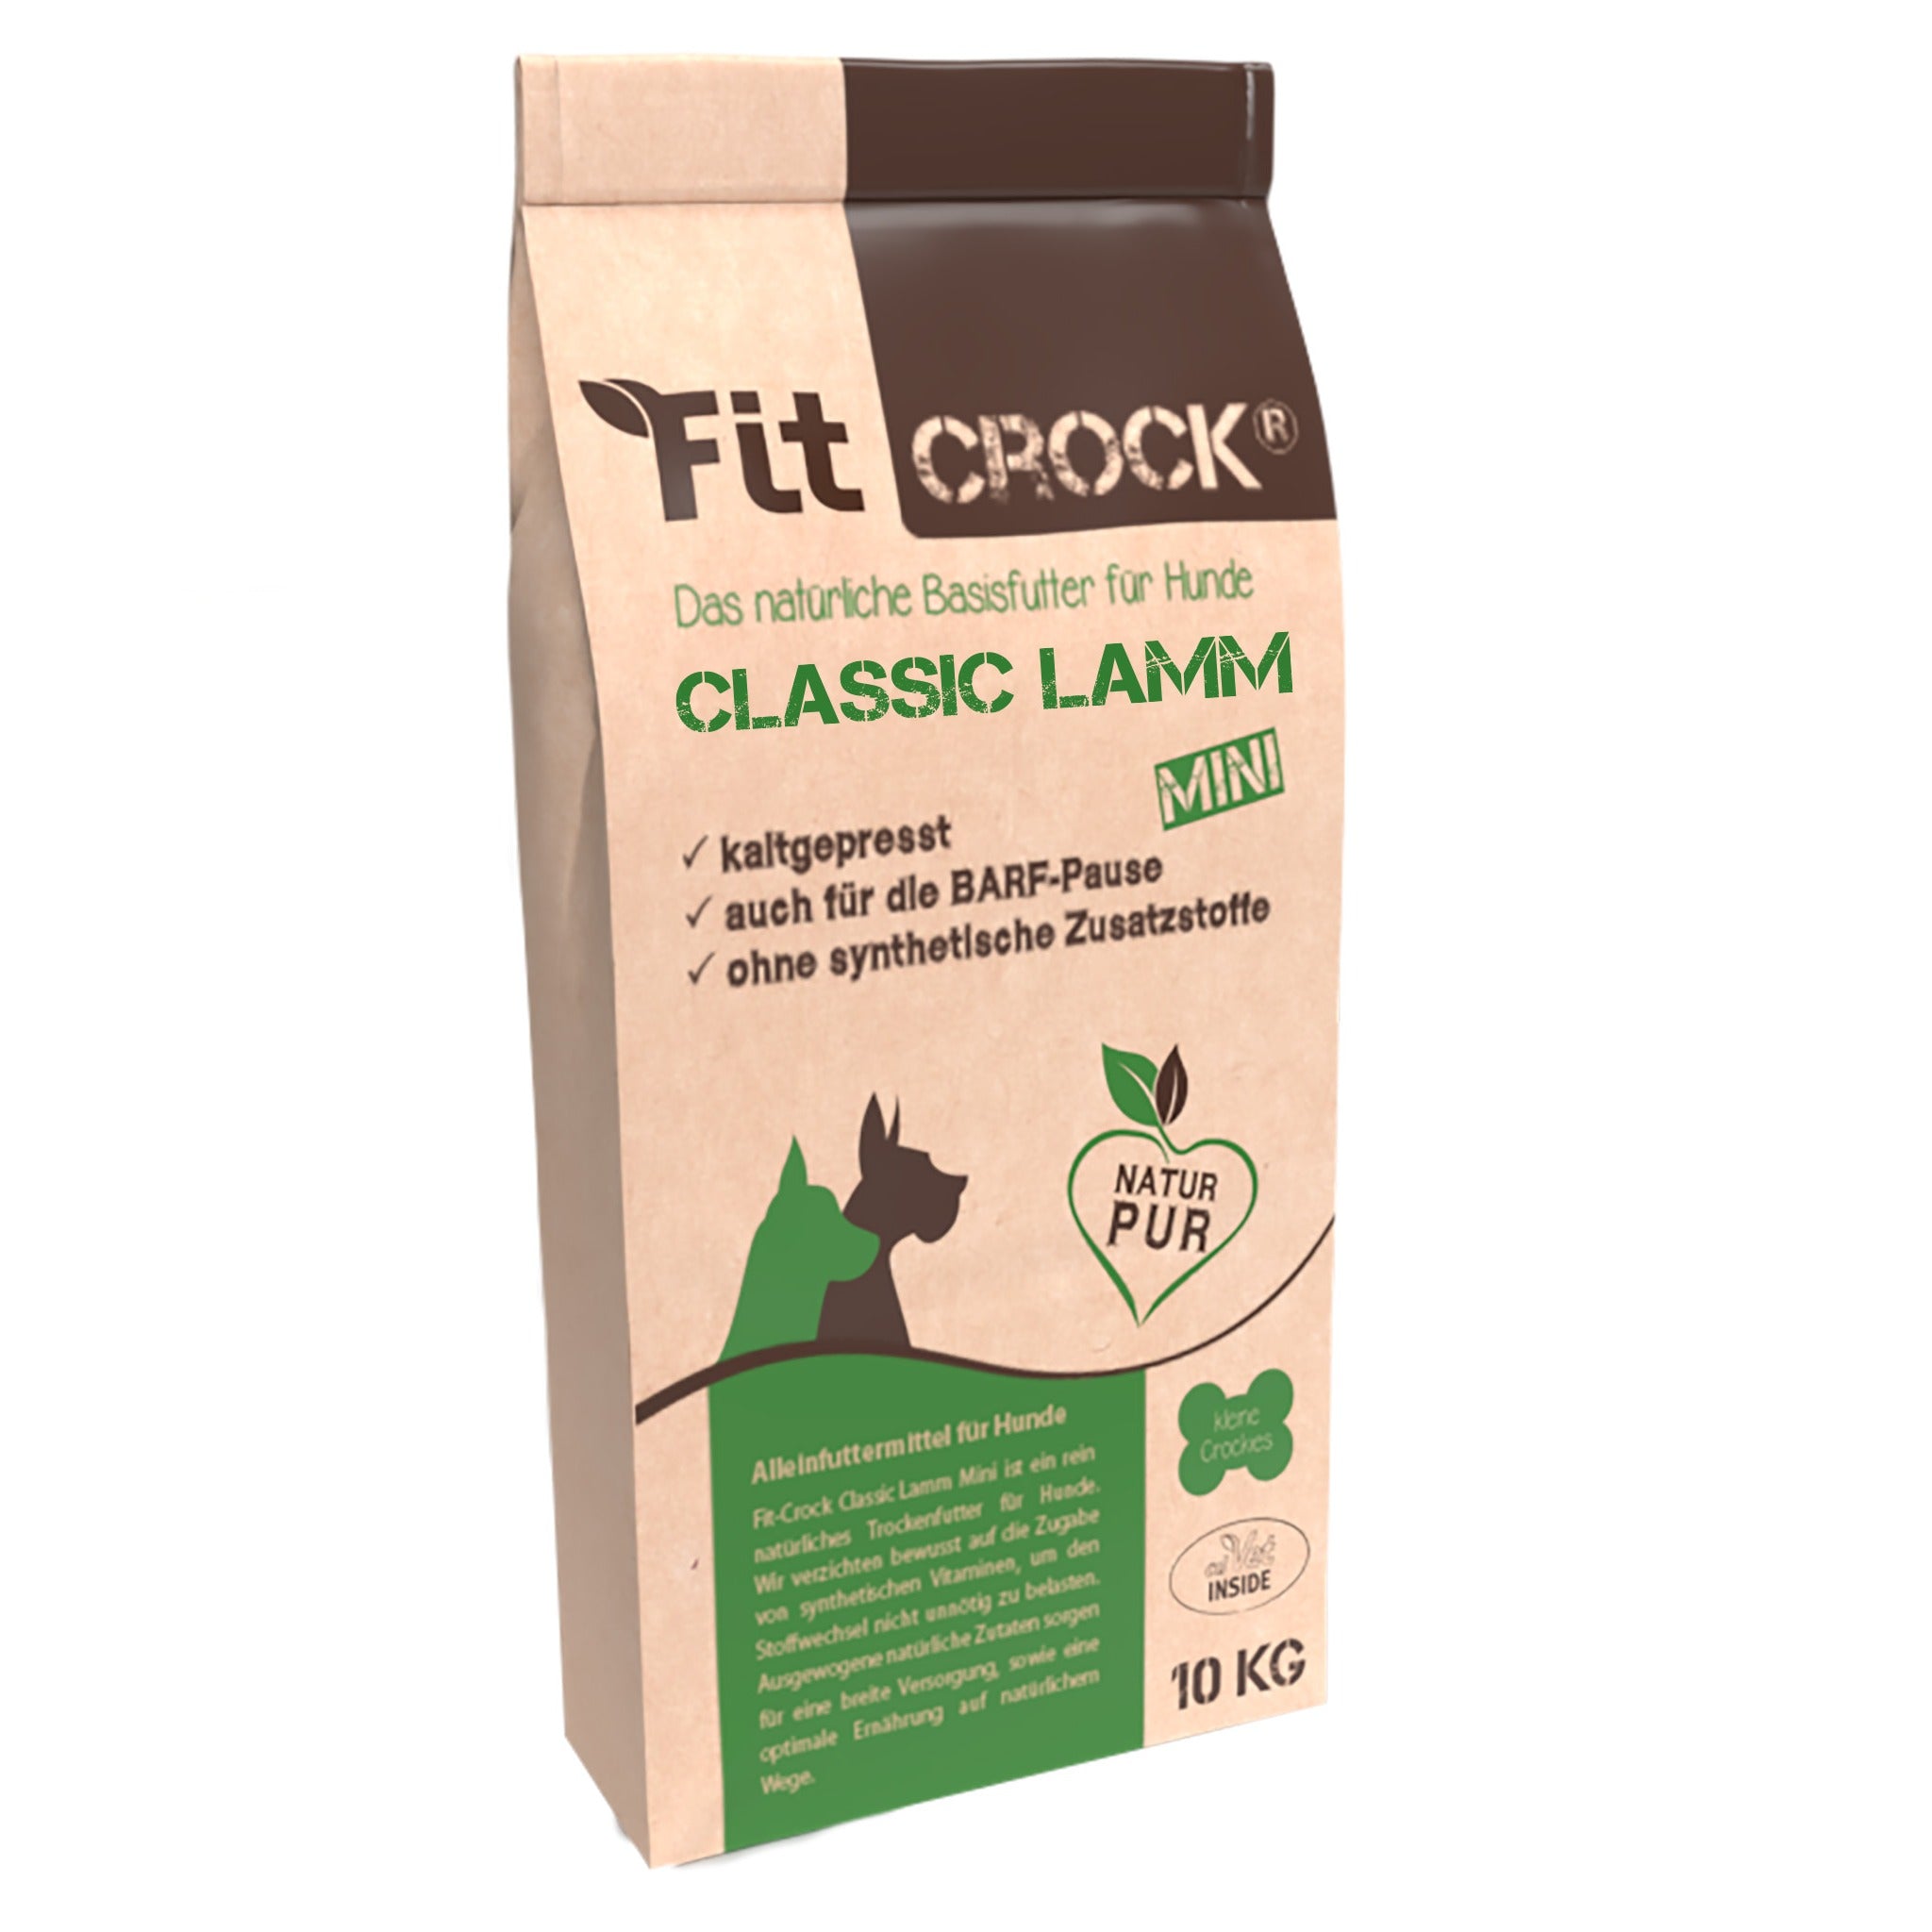 cdVet Fit-Crock Classic Lamm Mini - Kaltgepresst